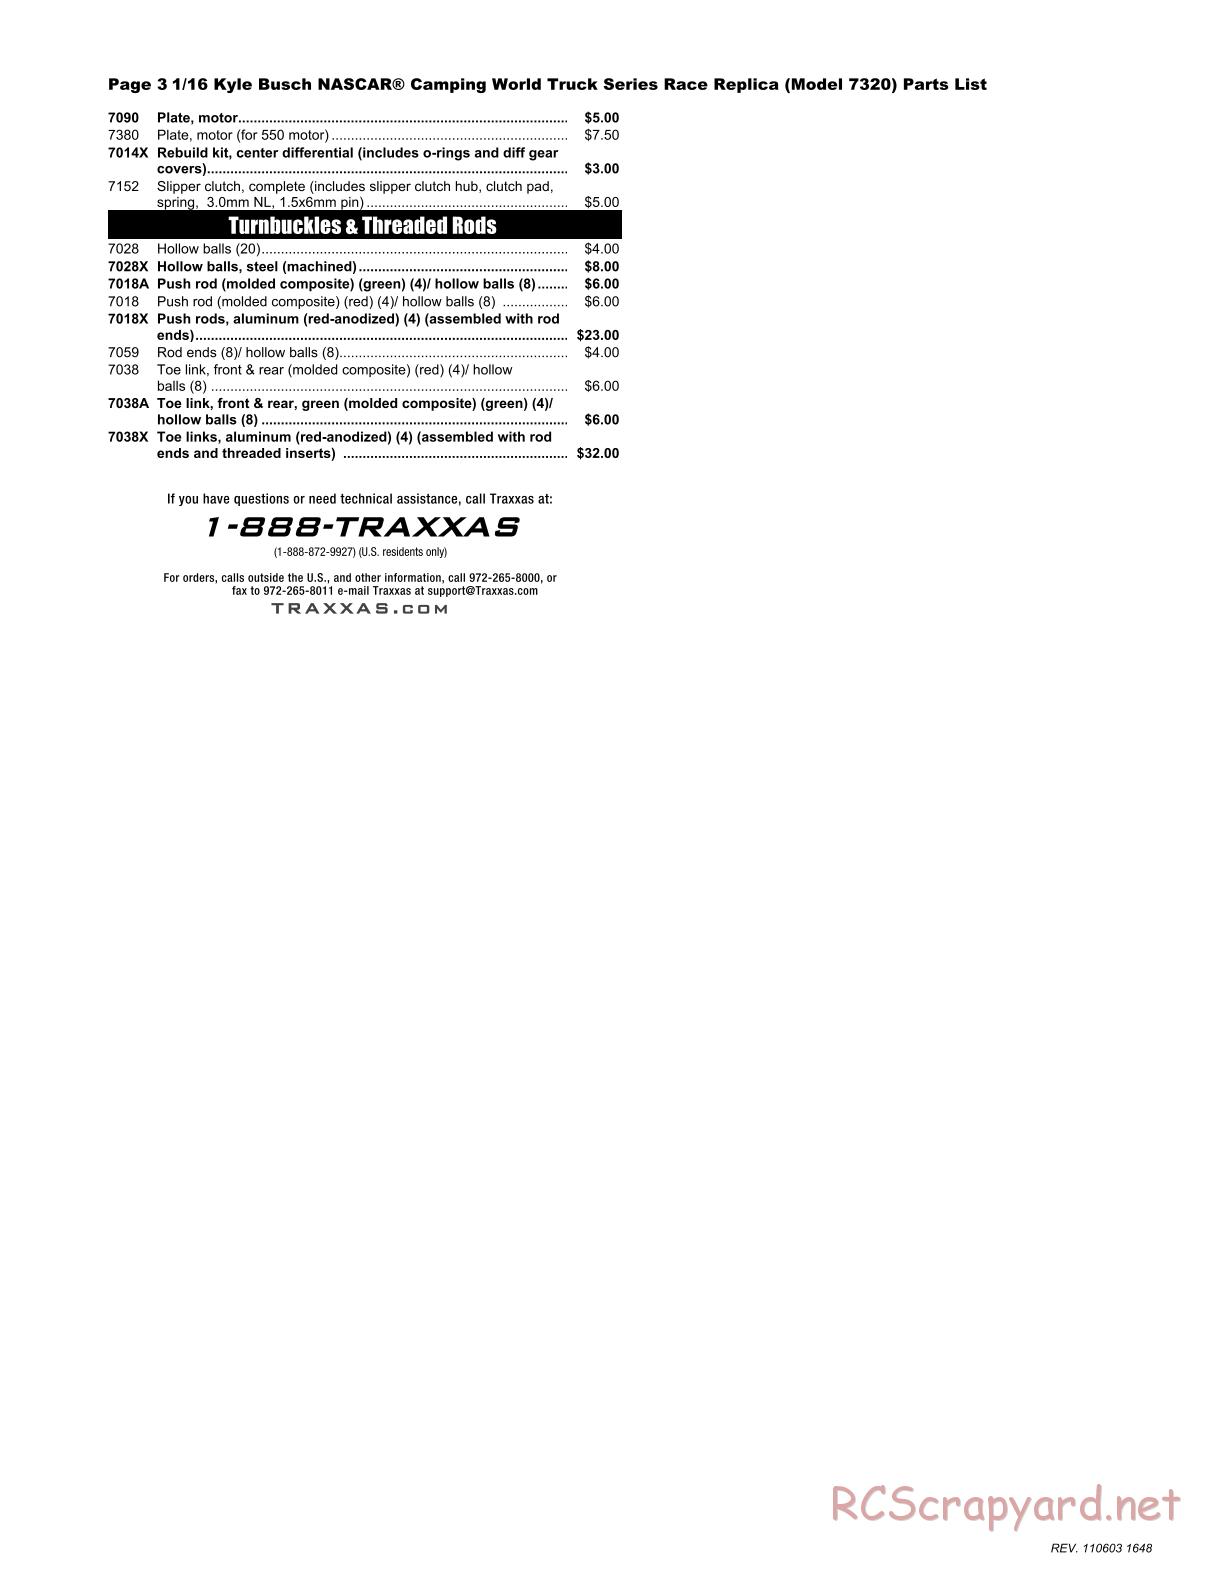 Traxxas - 1/16 Kyle Busch Race Replica (2011) - Parts List - Page 3